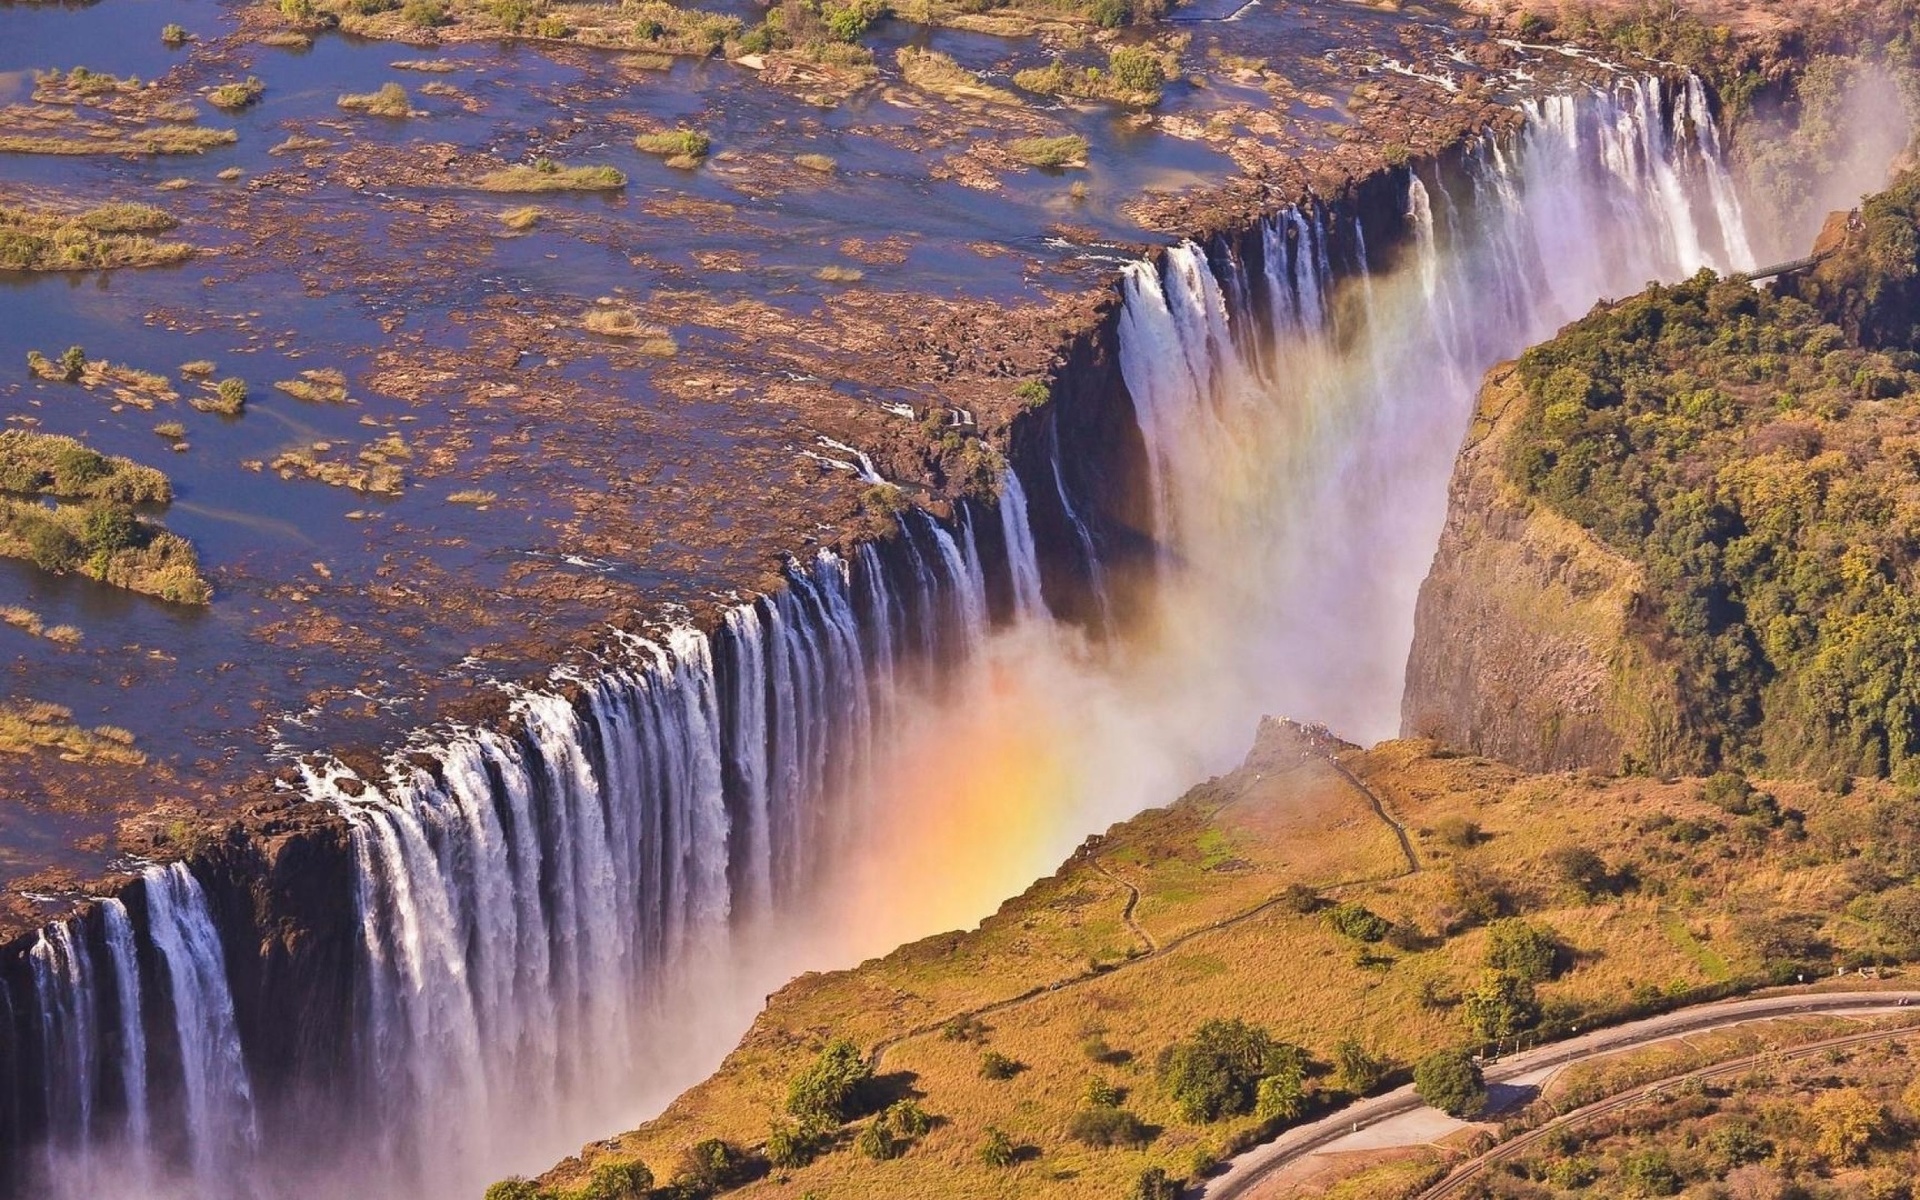 Vue aerienne - chutes d'eau Victoria - Zimbabwe.jpg